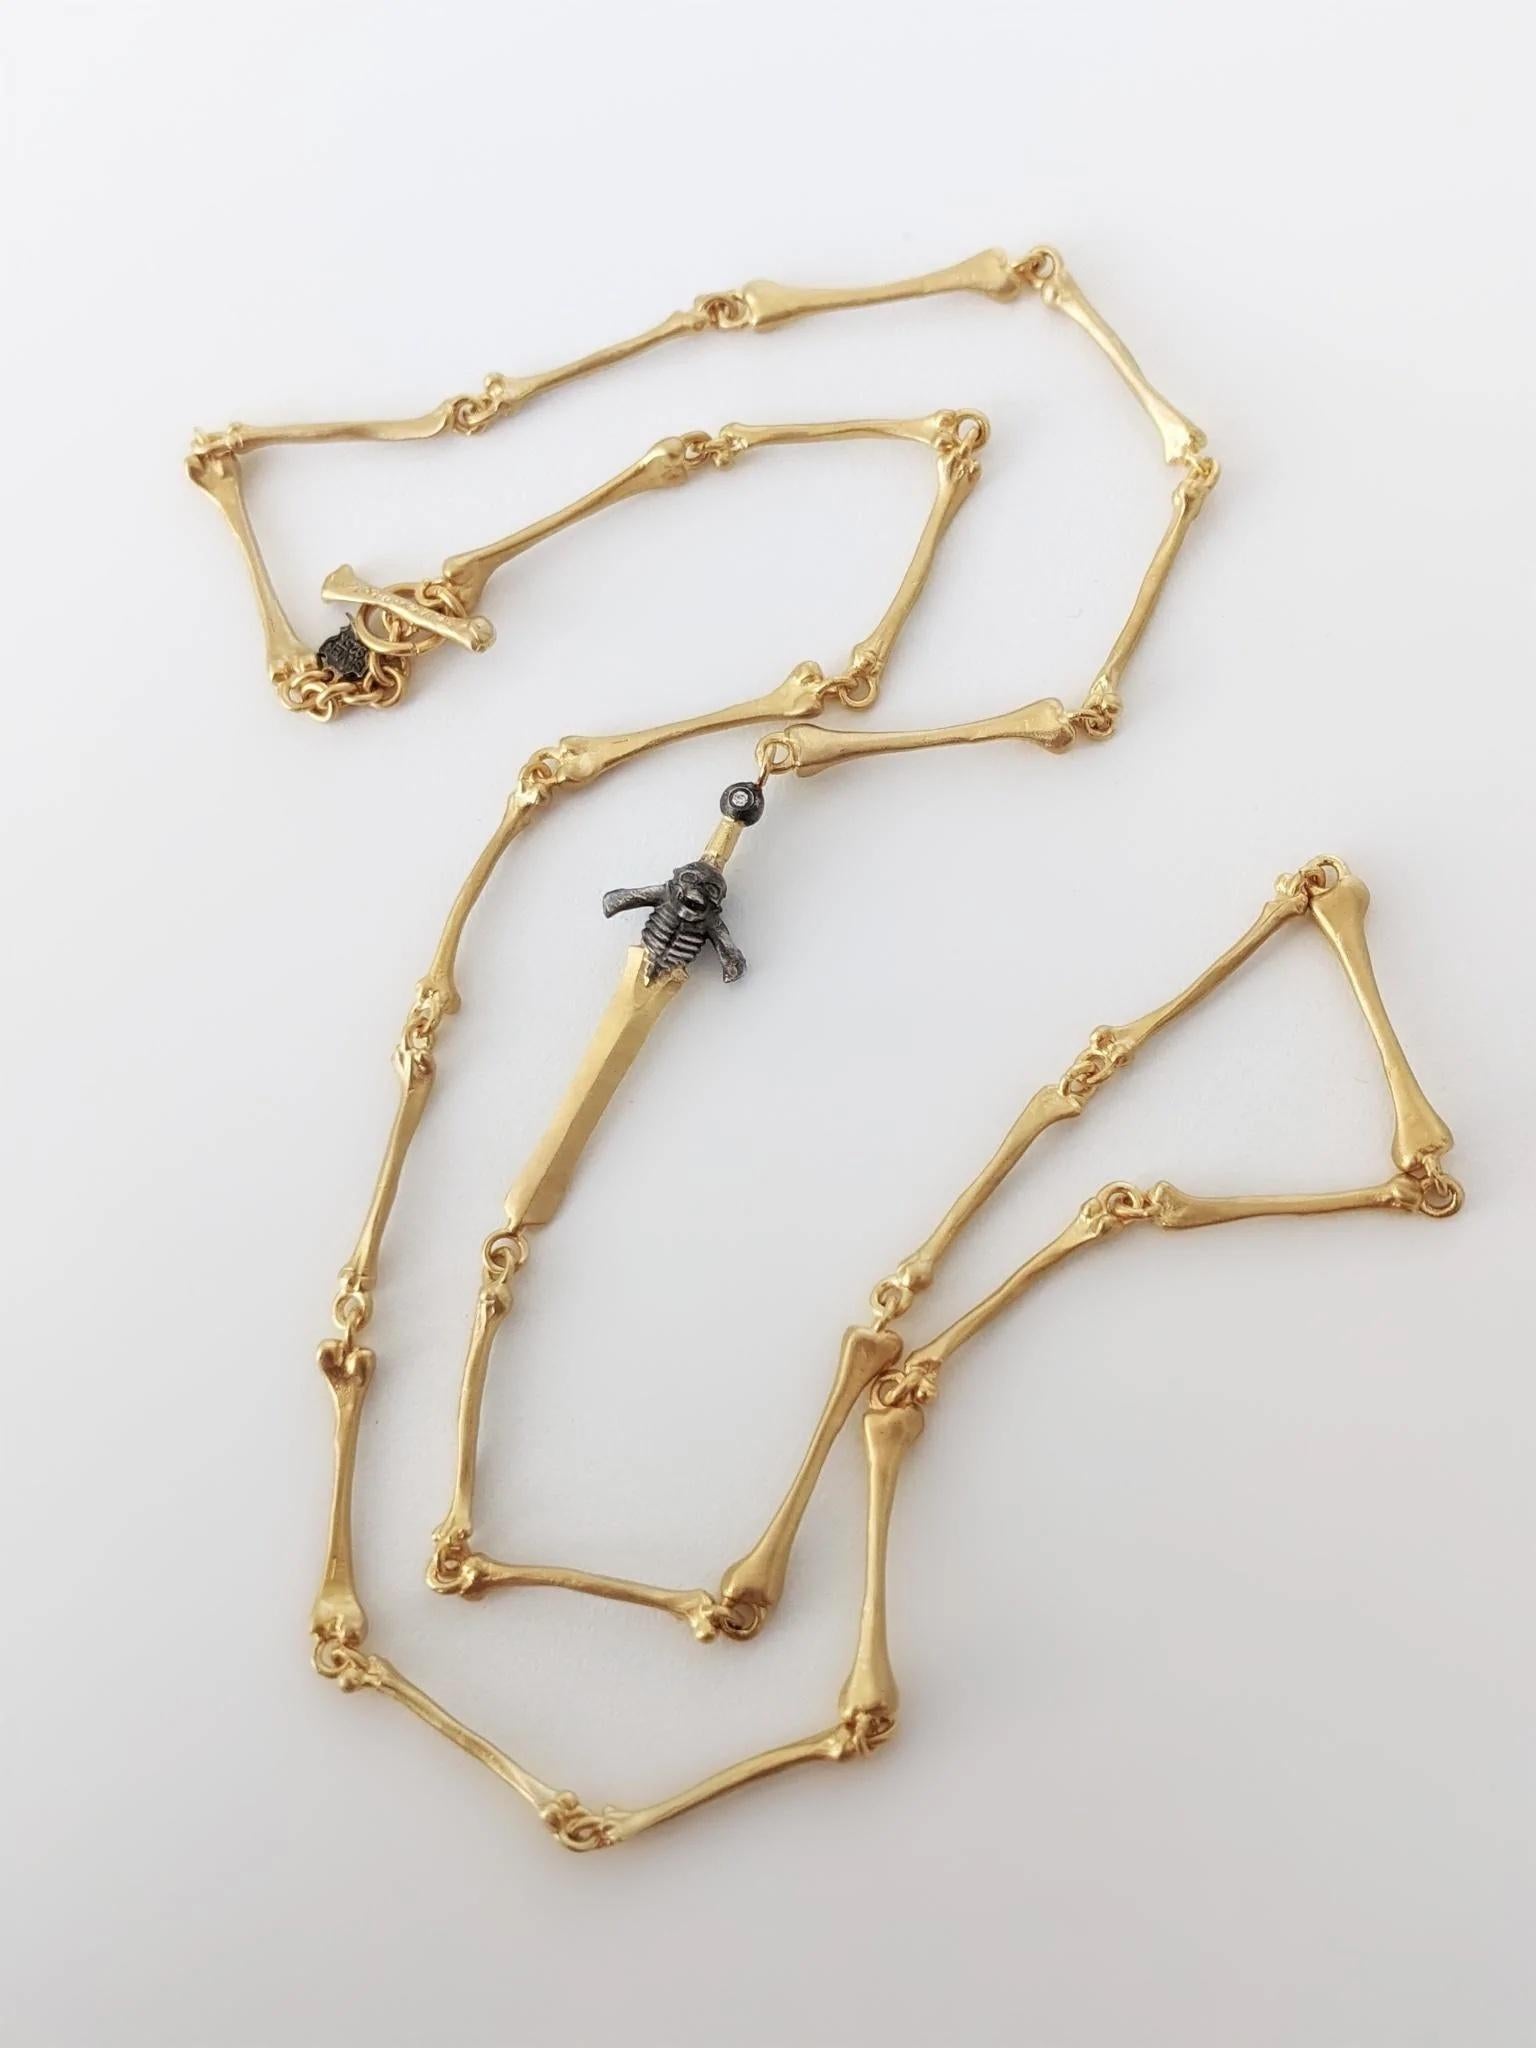 Byzantine Momento Mori Skeleton Bone Chain Necklace with Diamond Detail by Kurtulan